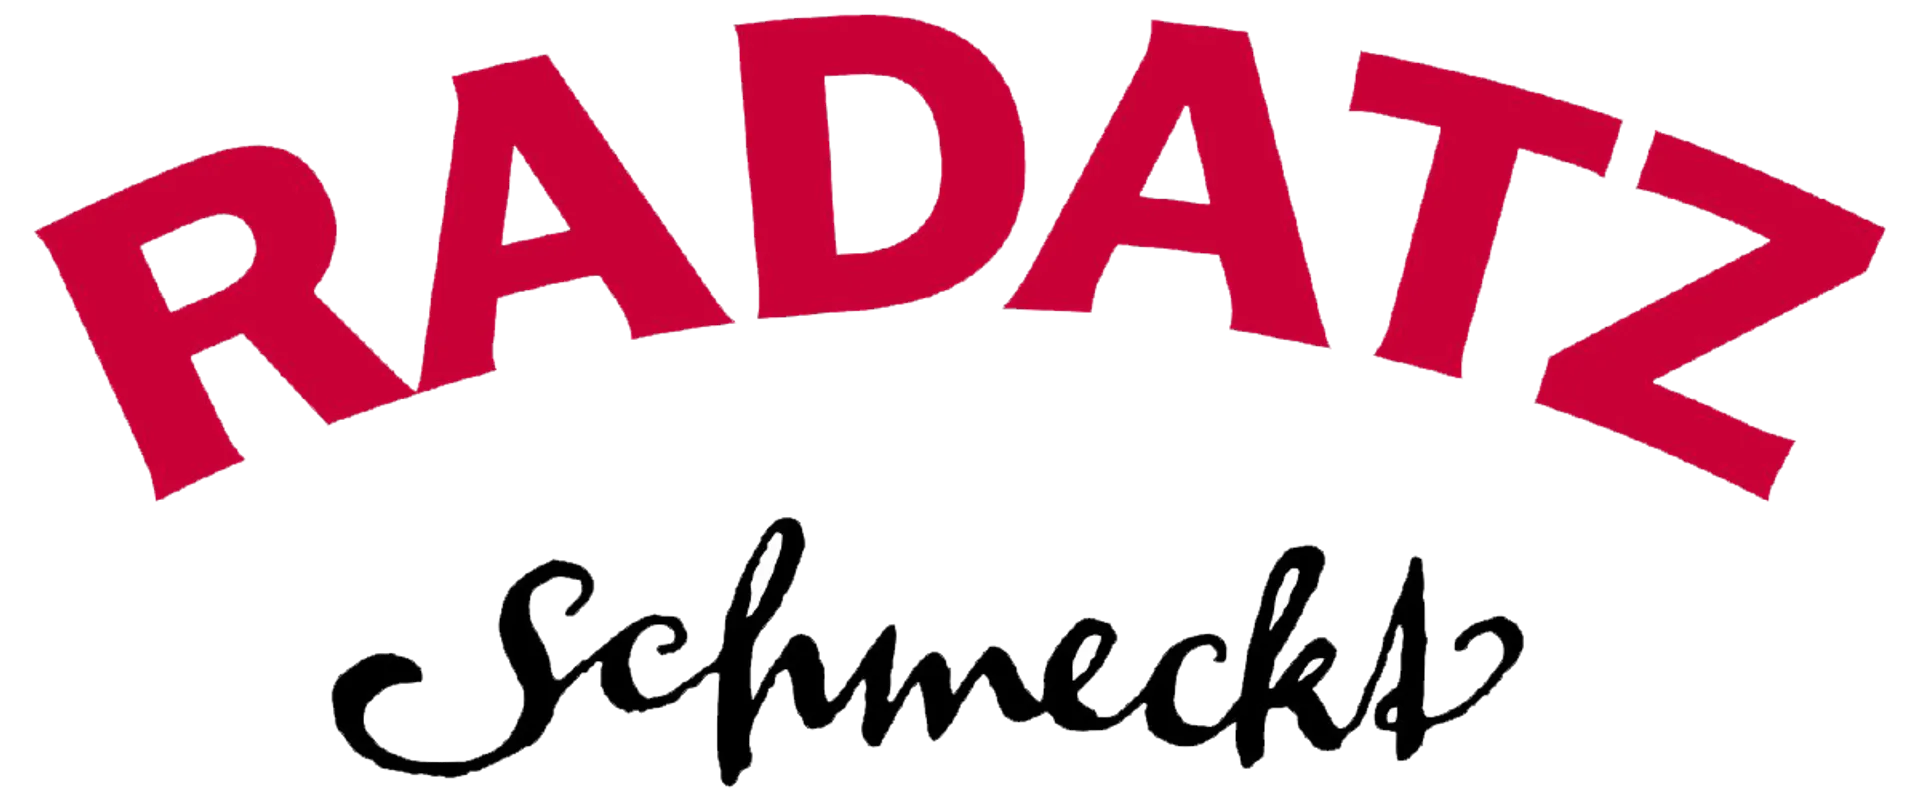 RADATZ logo